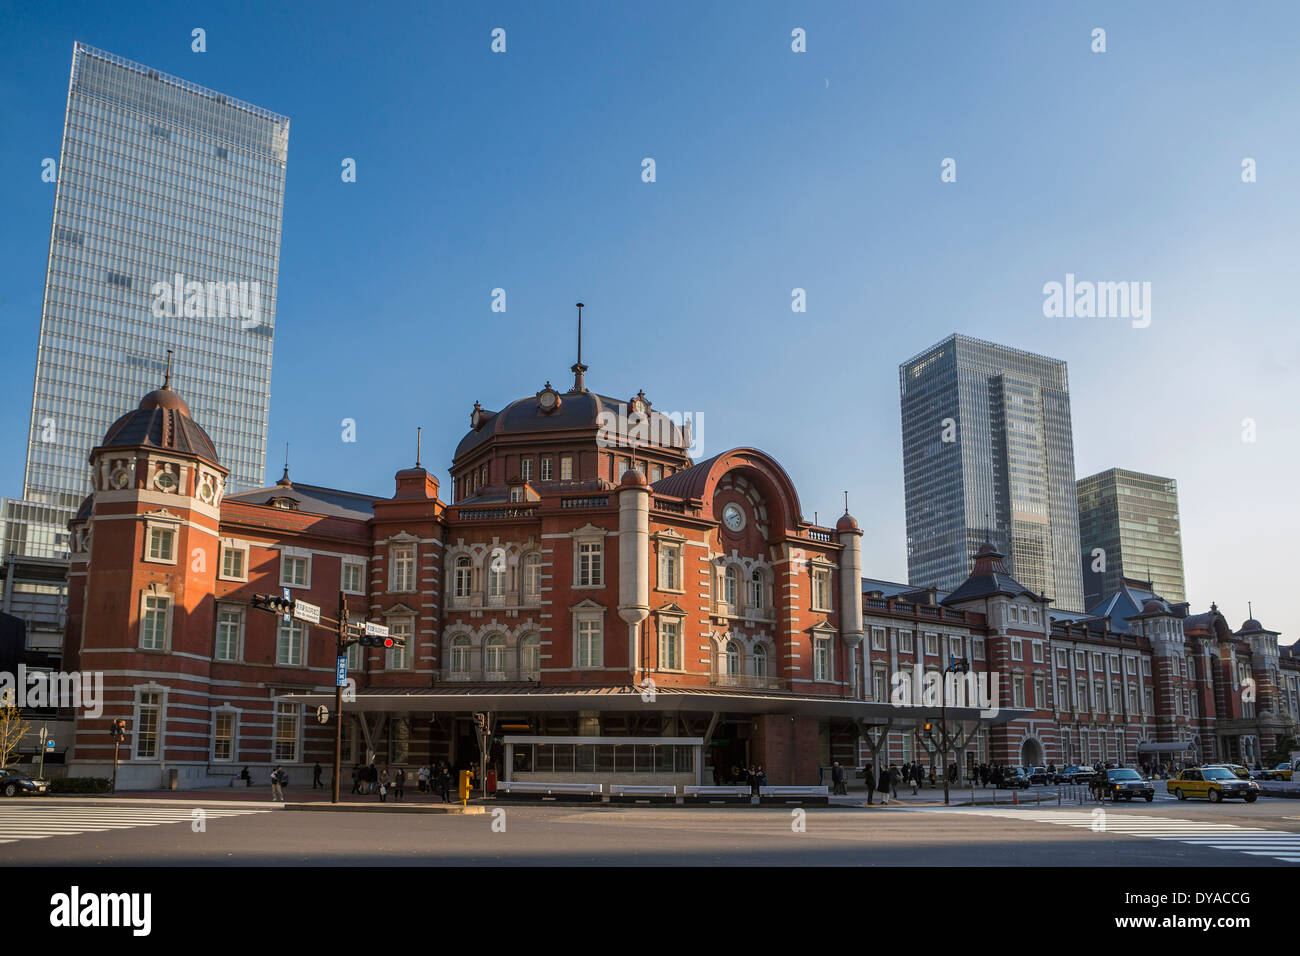 Japan, Asia, Tokyo, City, North, architecture, landmark, history, renewed, station, touristic, travel Stock Photo